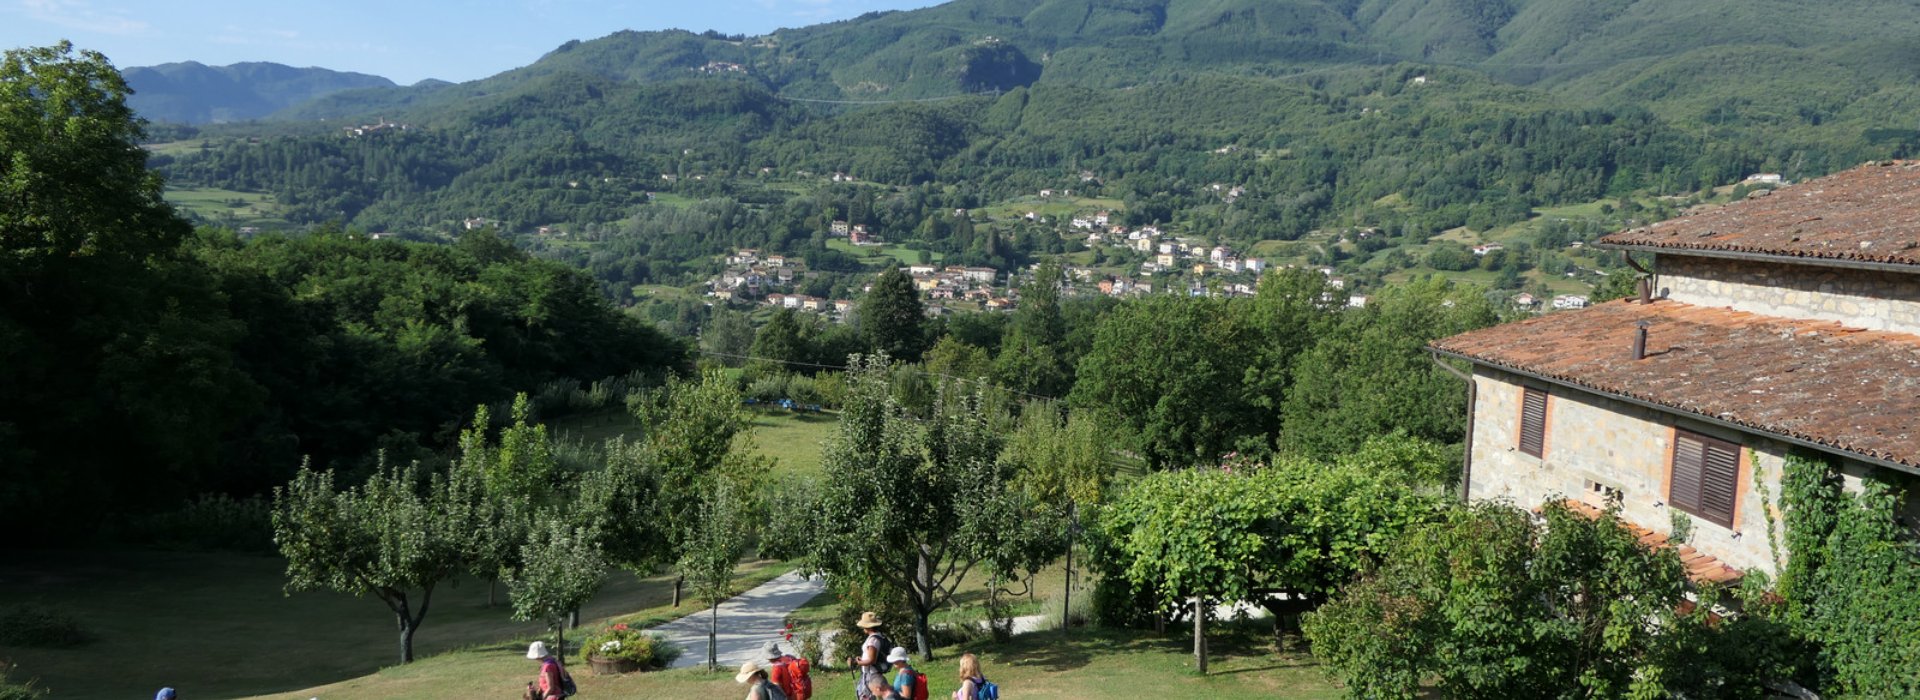 Trekking e camminata in Garfagnana vicino alla Rocca Ariostesca a Castelnuovo di Garfagnana